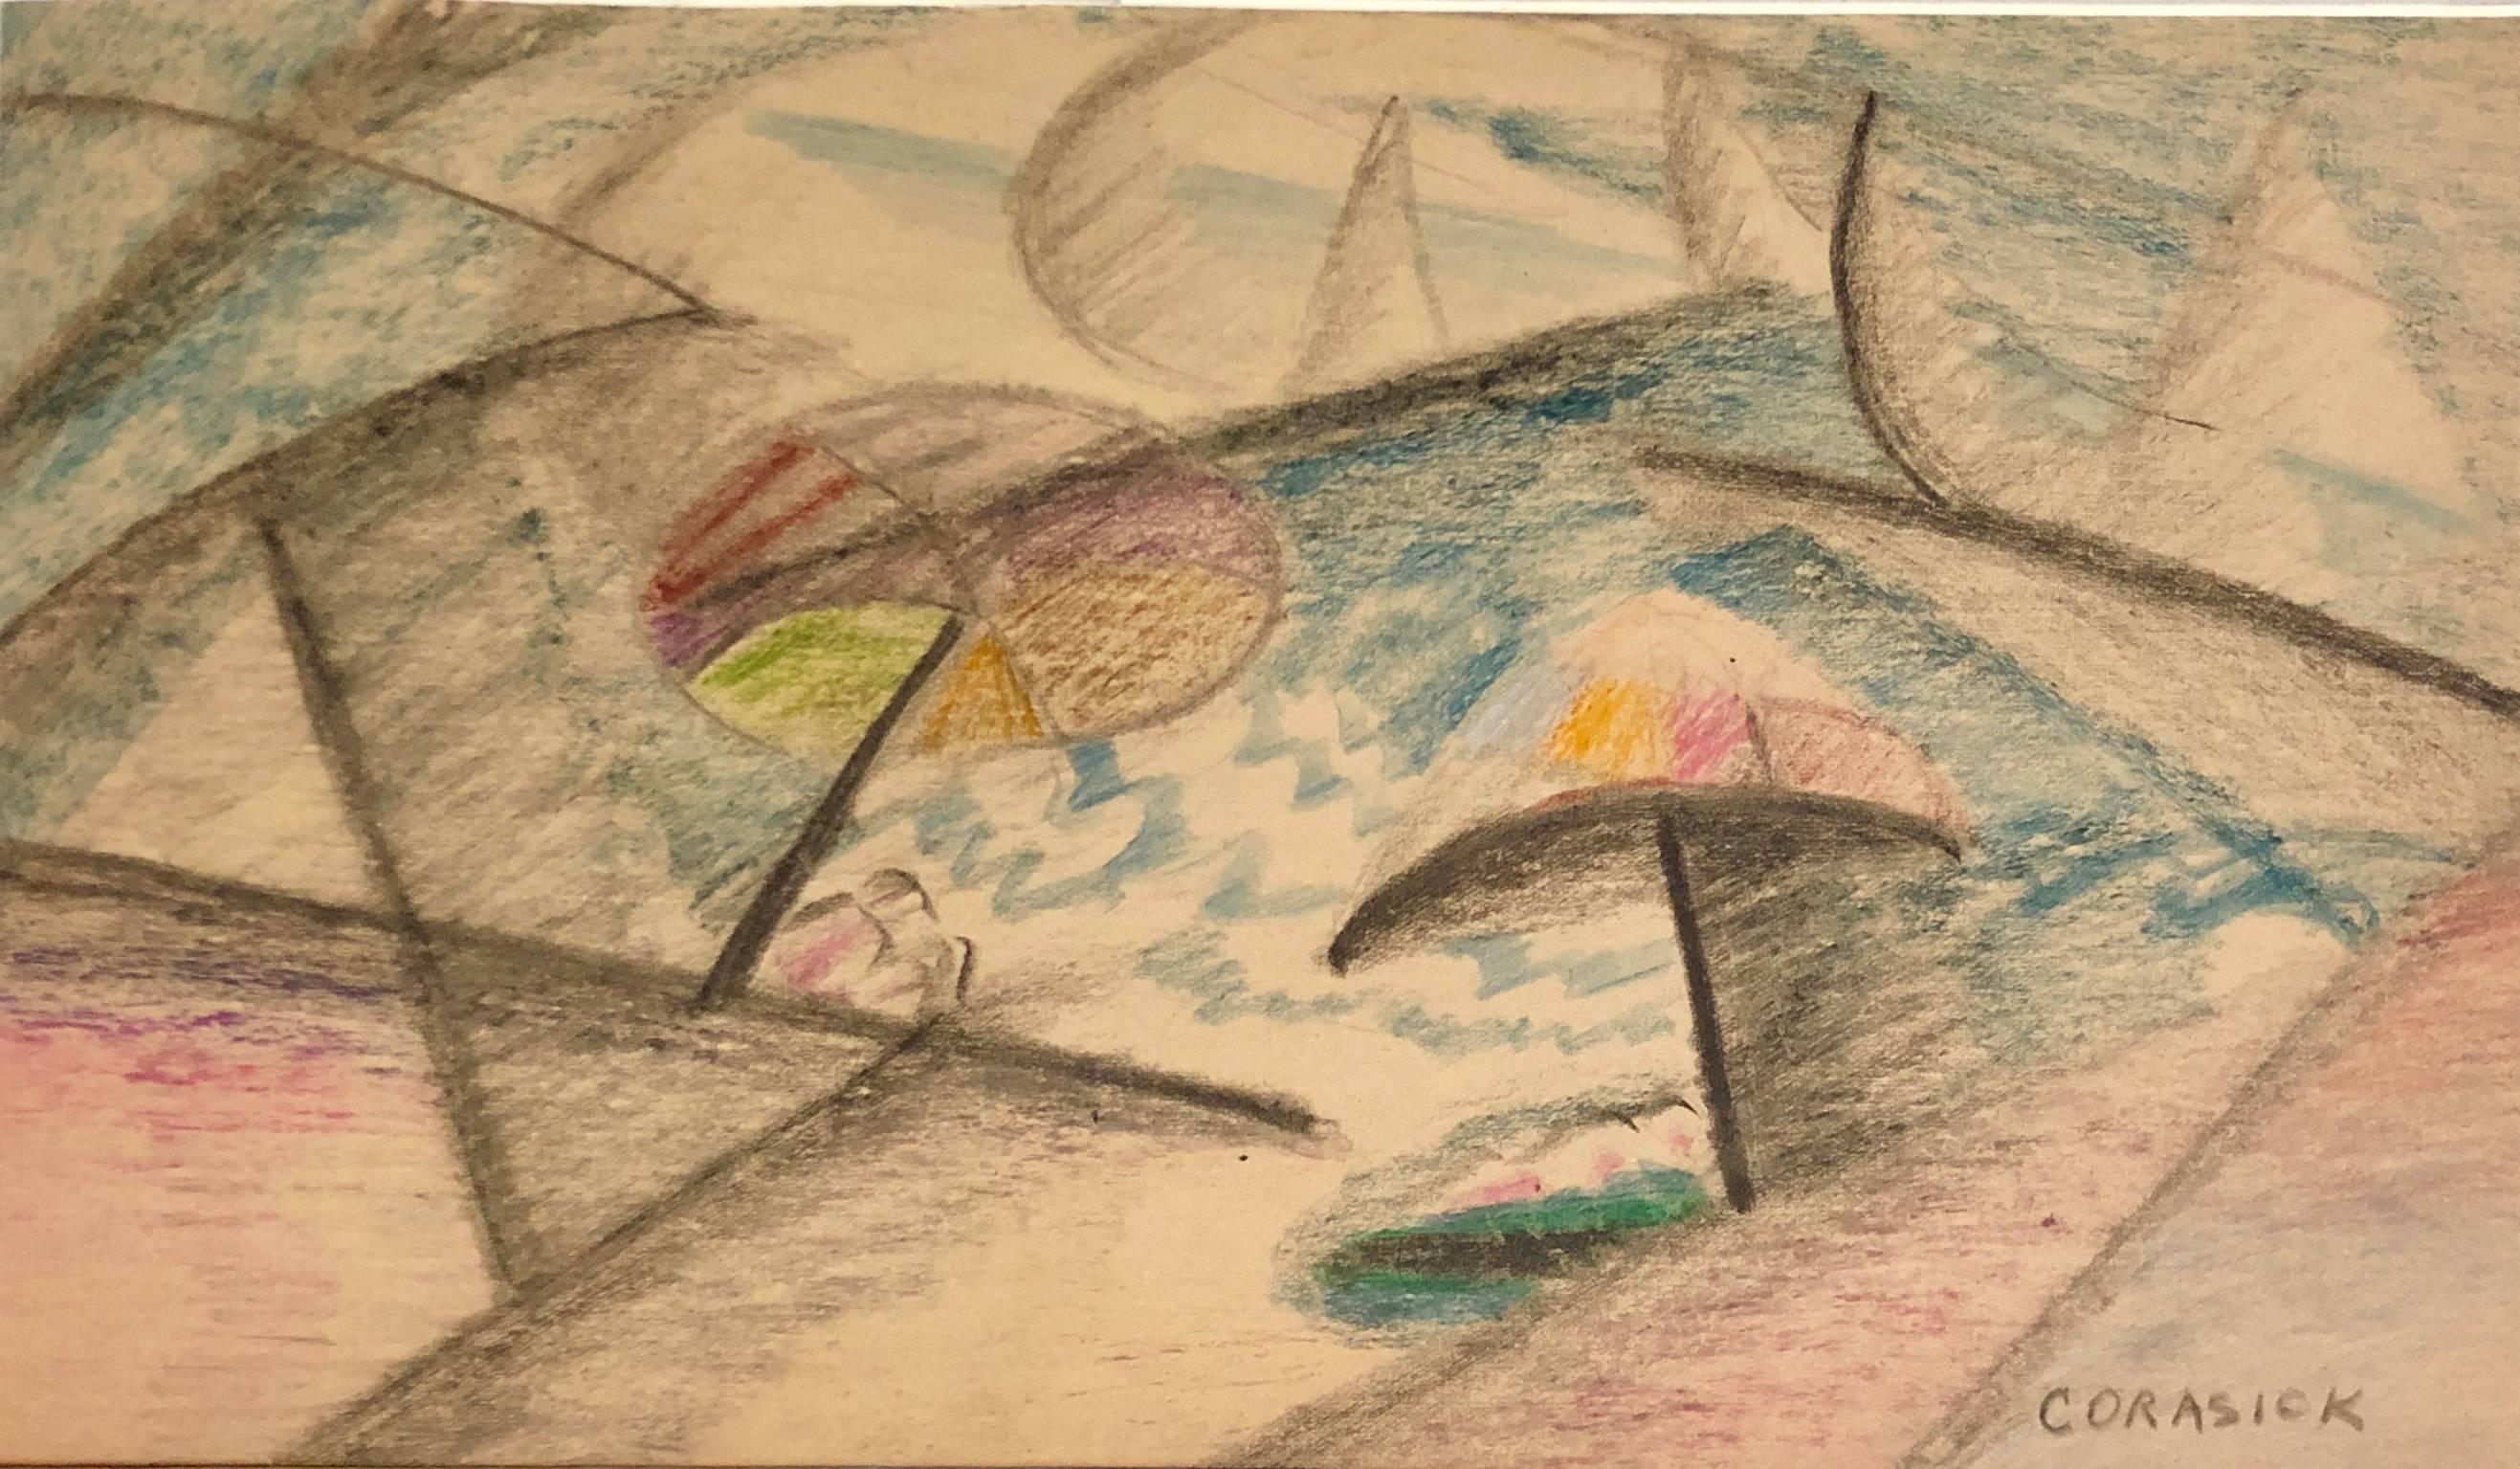 William Corasick Landscape Art - Modernist Crayon Pastel Drawing Cubist Beach Scene with Umbrellas